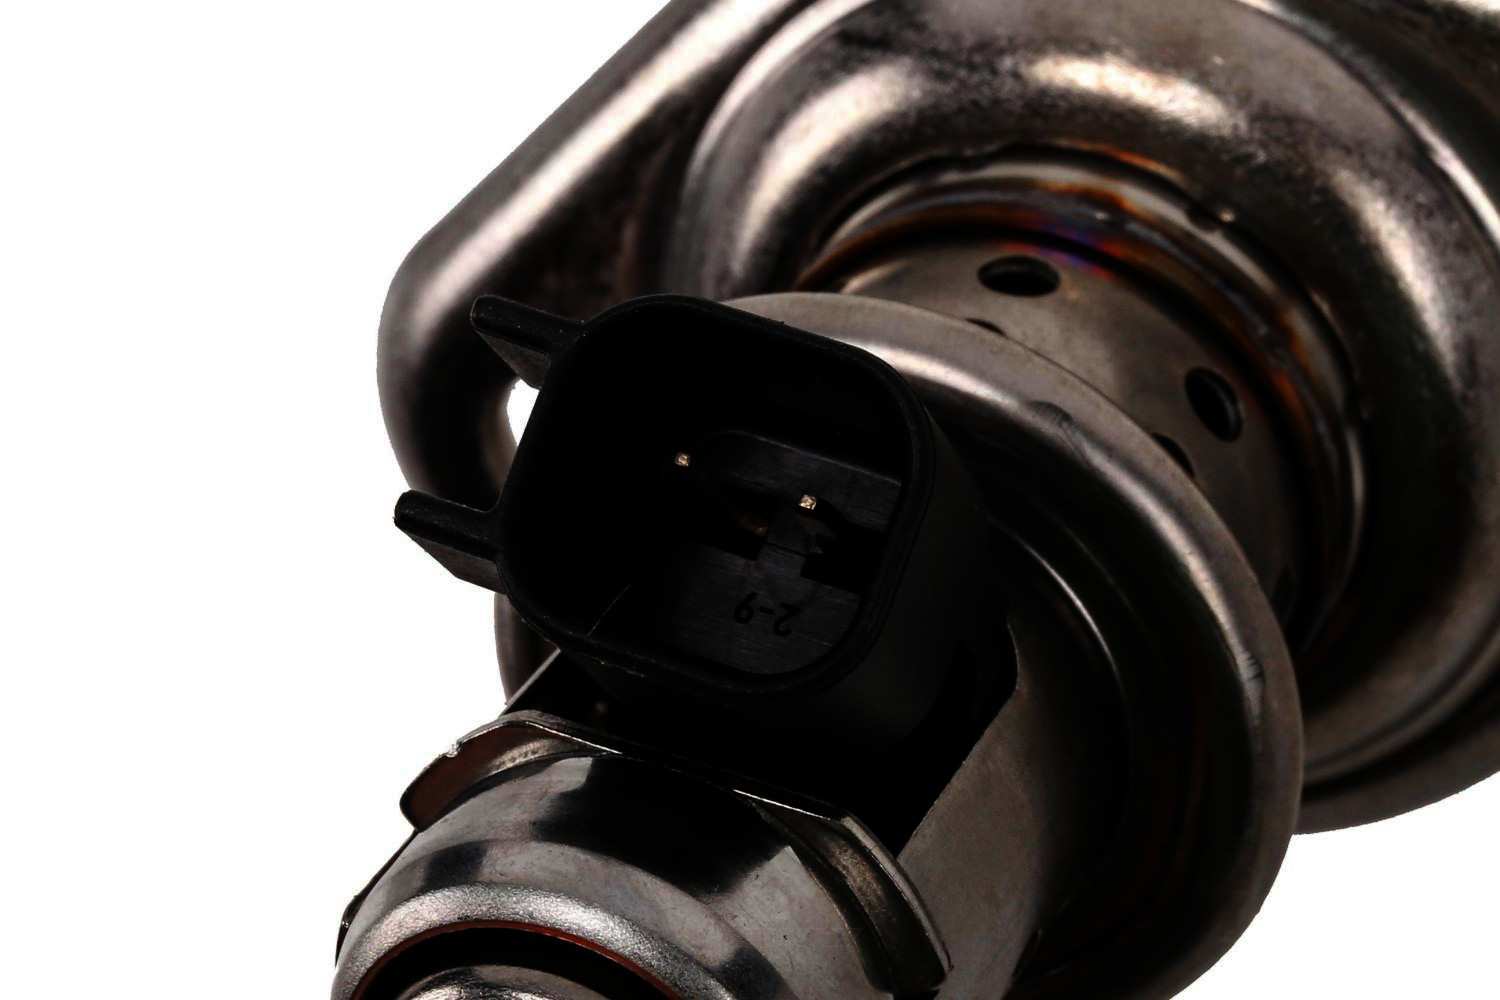 GM GENUINE PARTS - Diesel Exhaust Fluid (DEF) Injection Nozzle - GMP 55501991